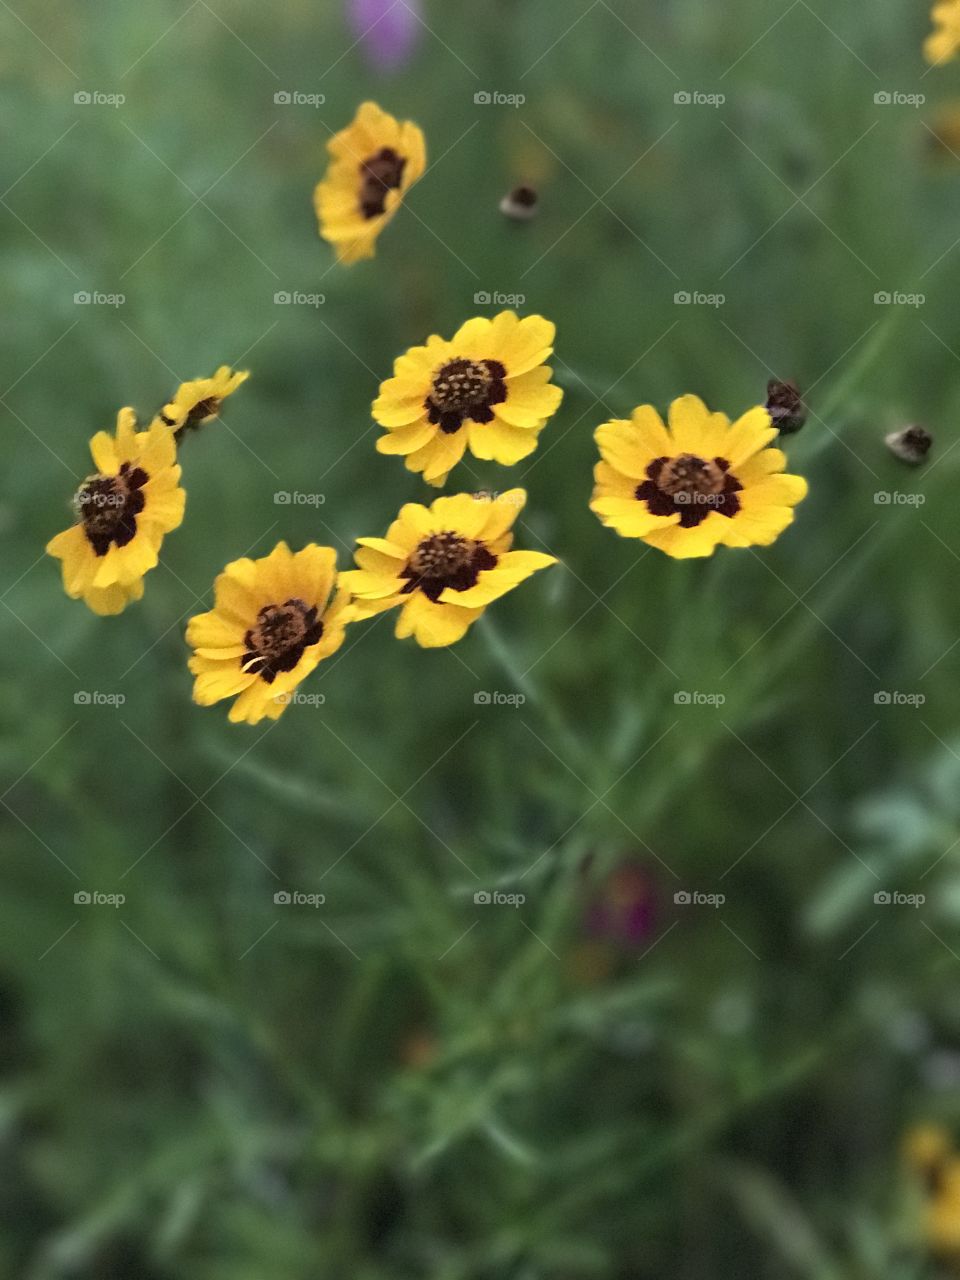 Wildflowers in my garden 